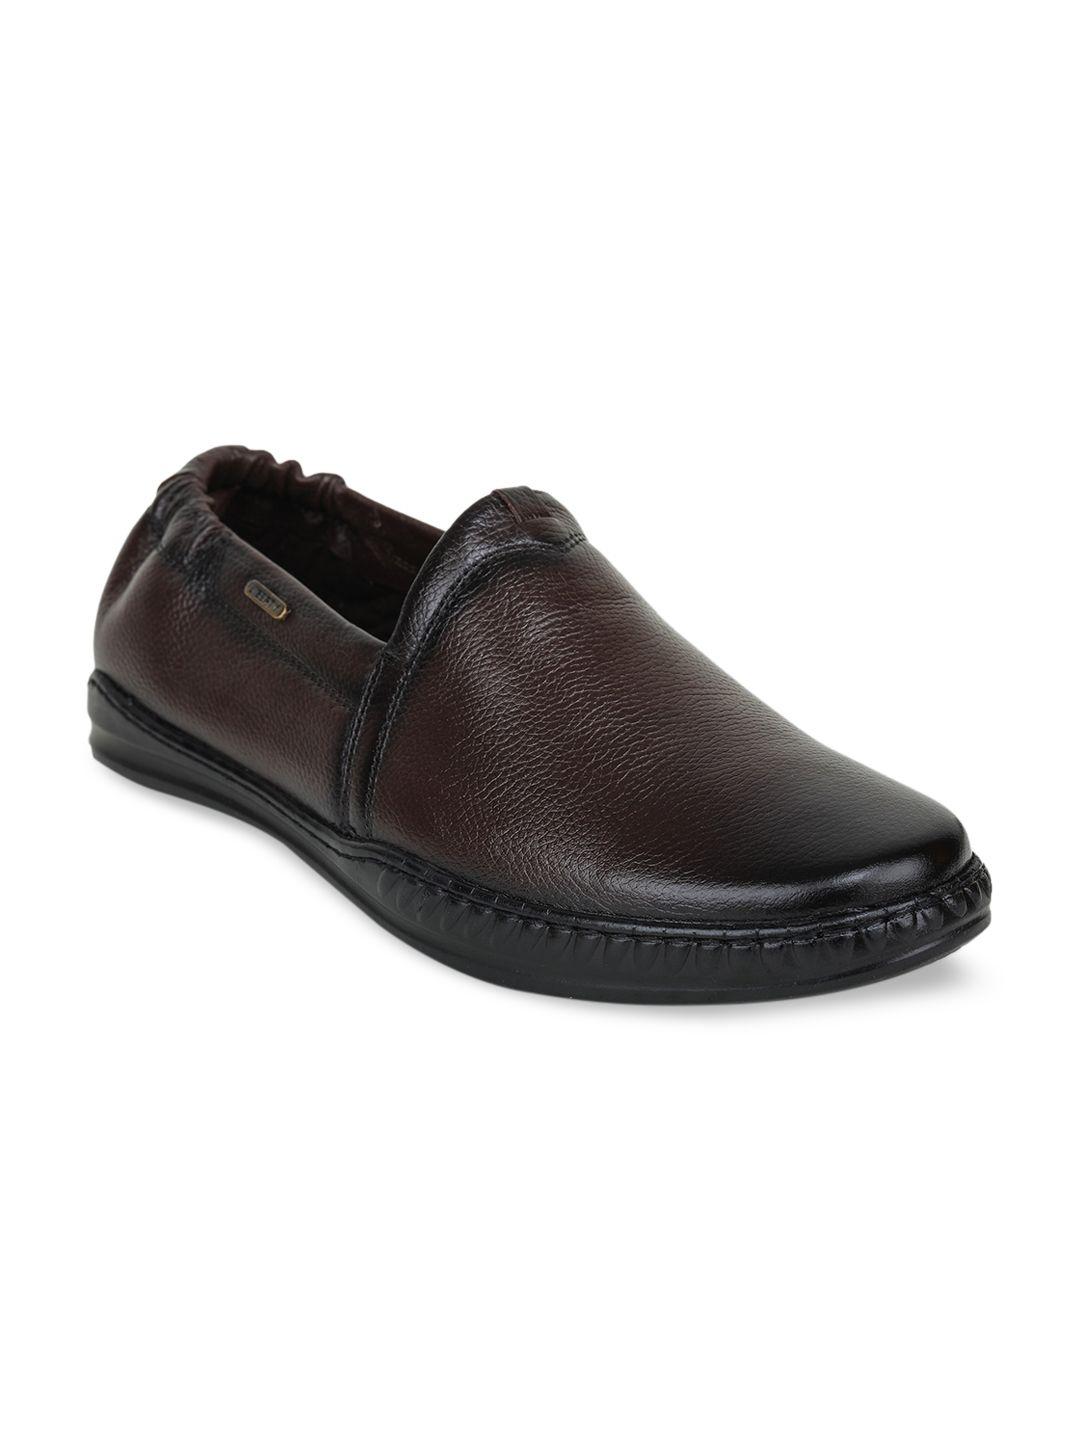 liberty-men-brown-textured-leather-trekking-shoes